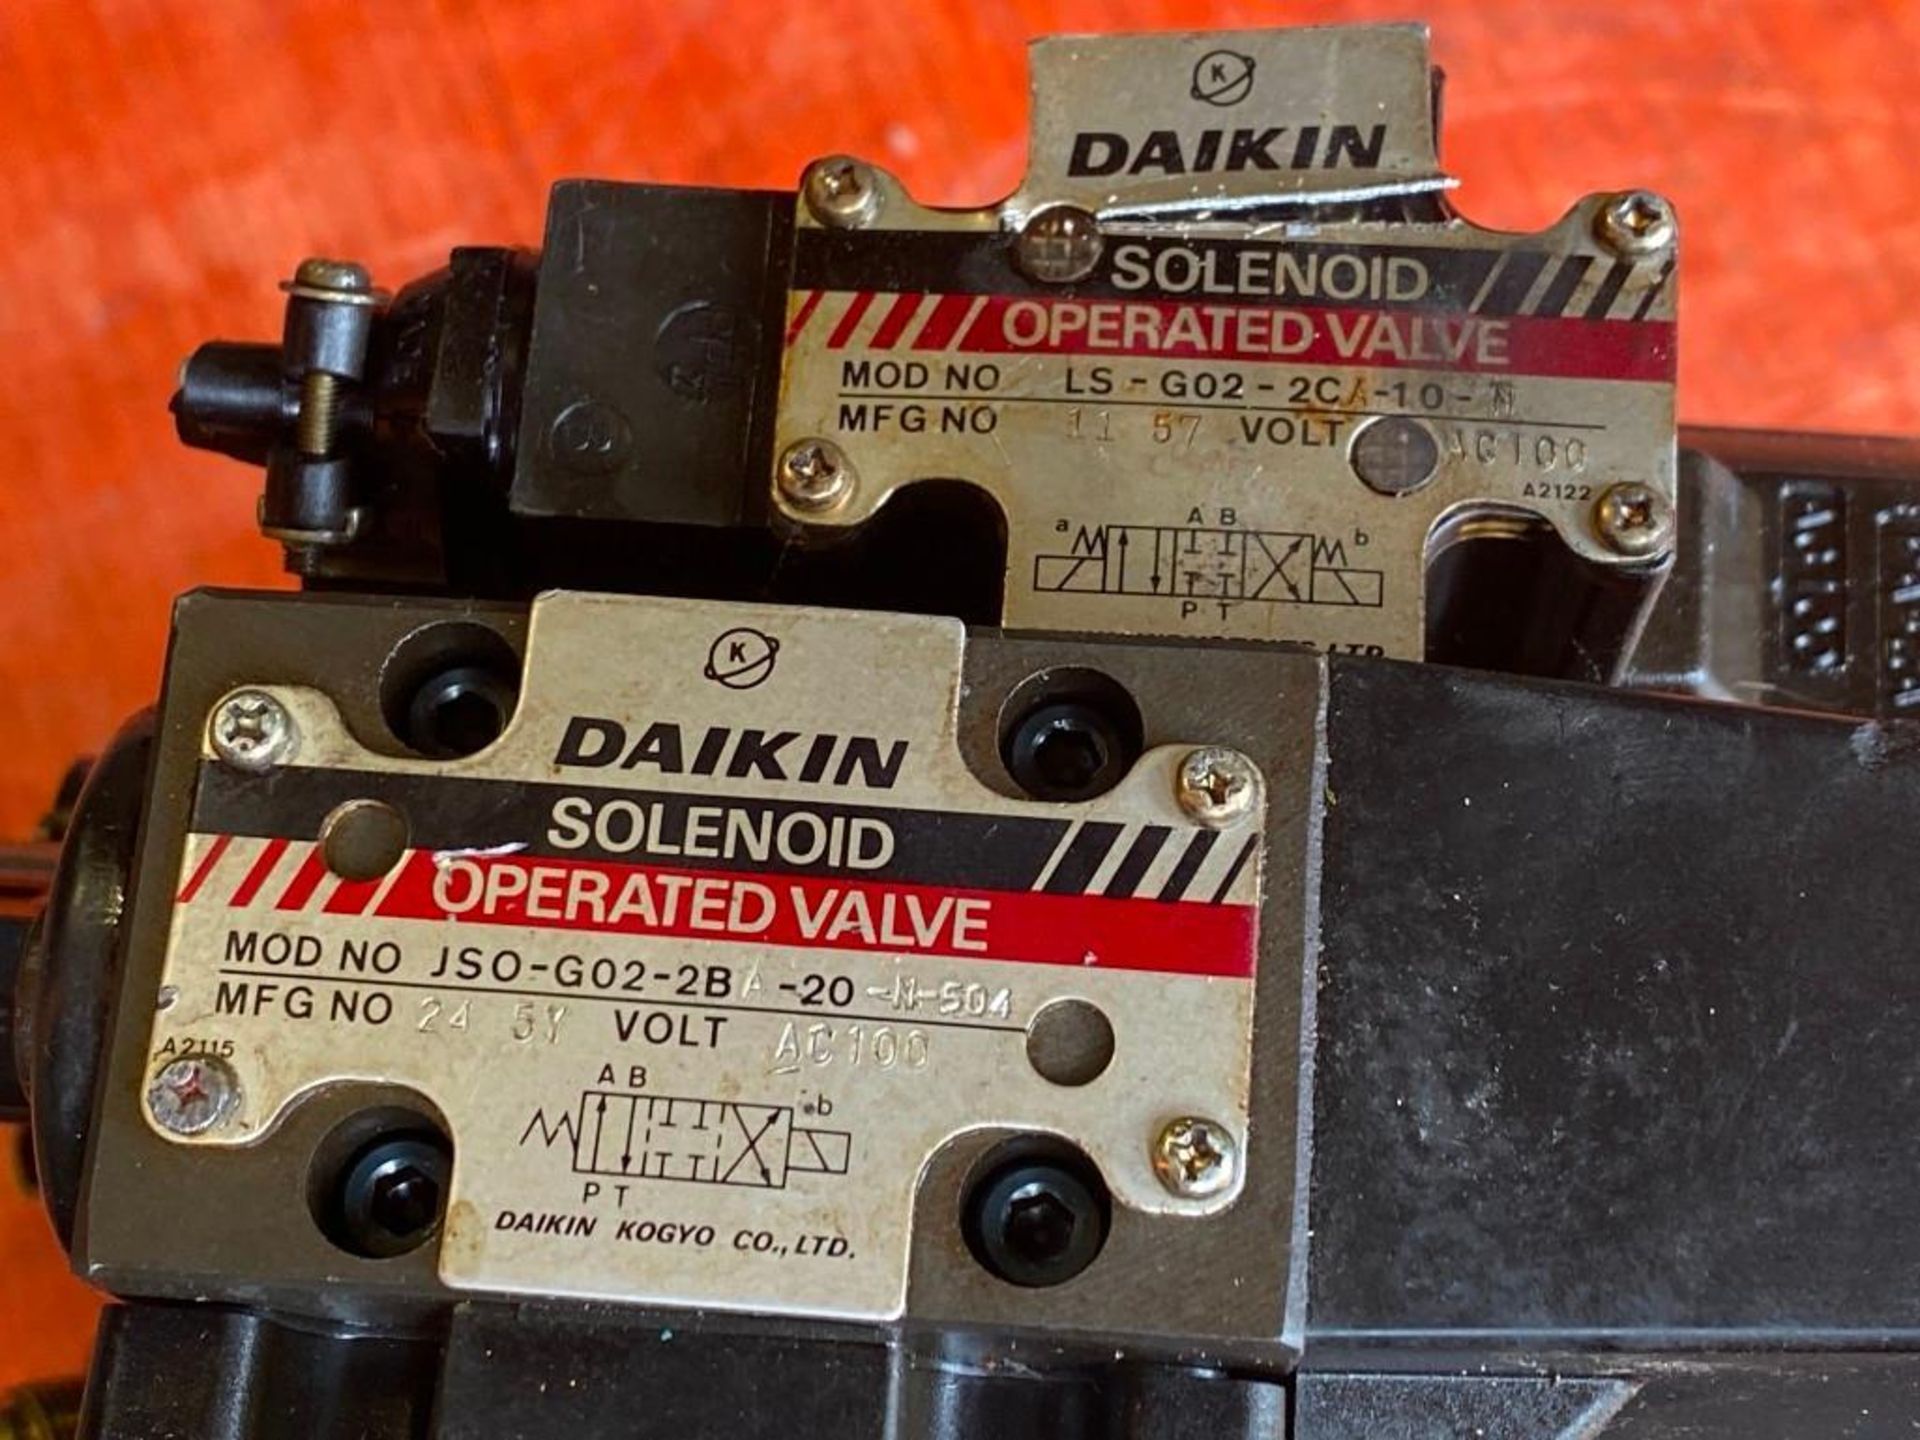 Daikin #SDM174-2V2-2-20-069 Pump w/Daikin Solenoid Valves - Image 3 of 4